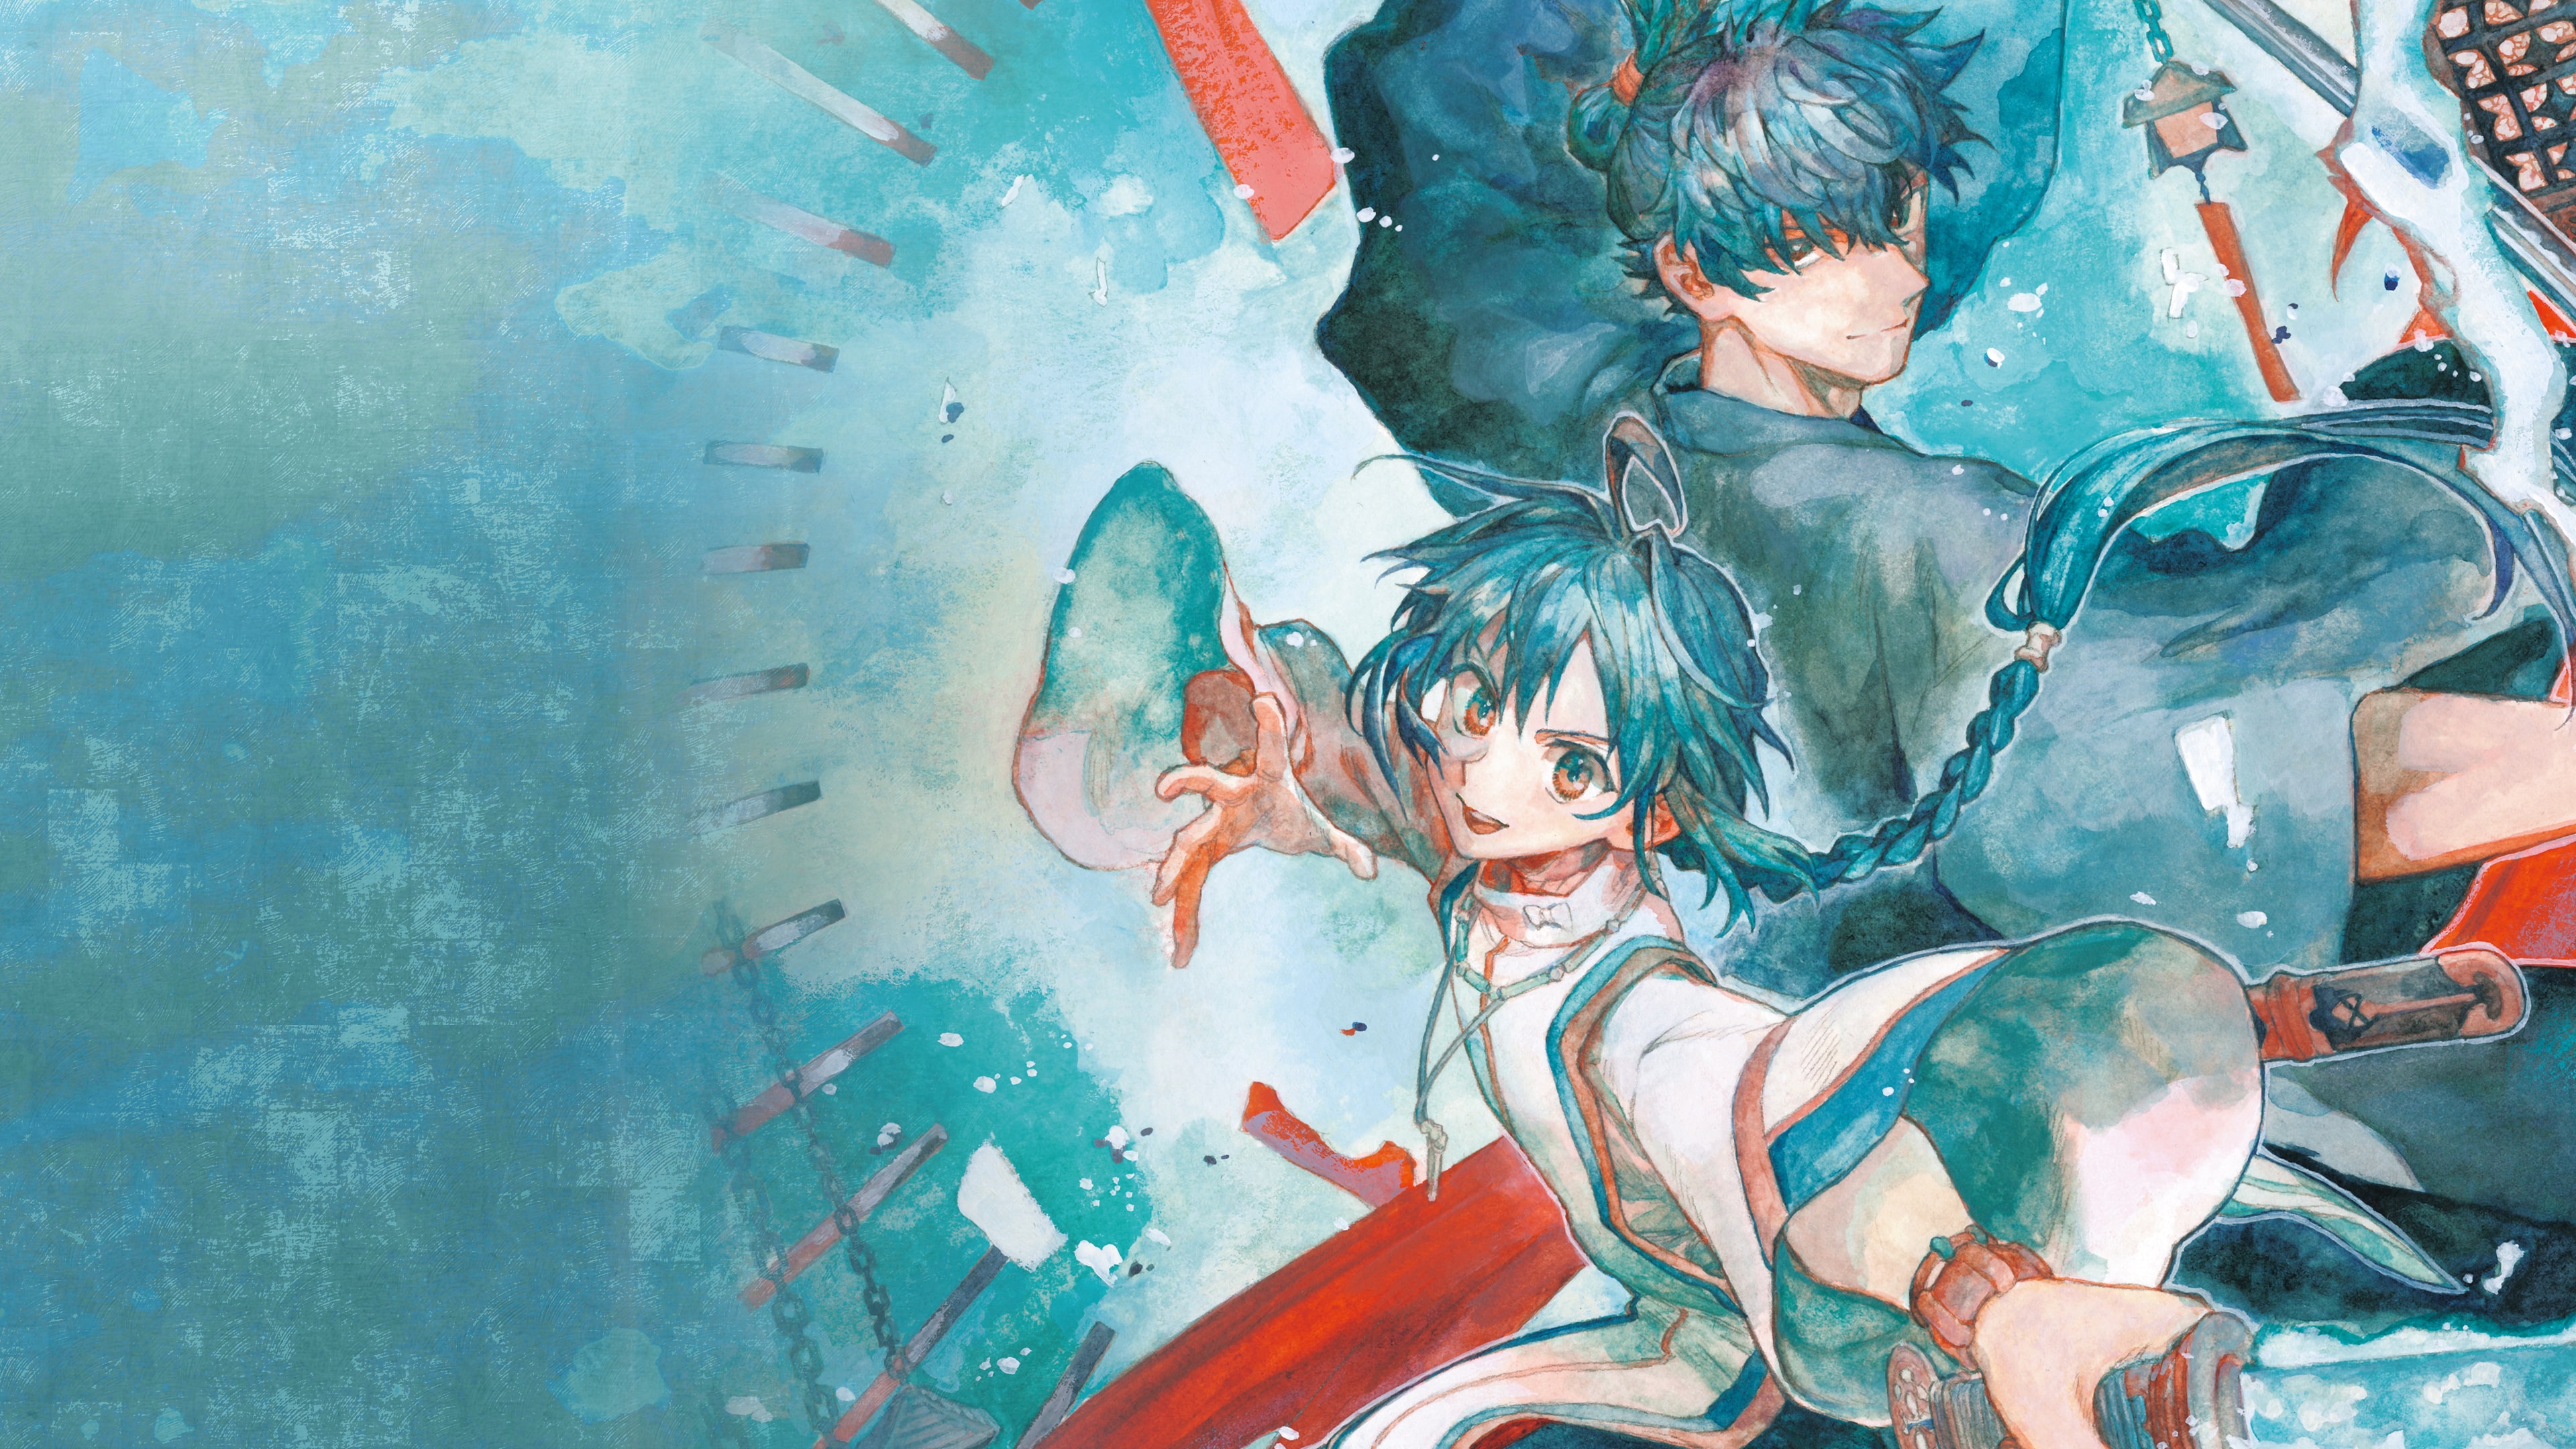 Fate/Samurai Remnant Digital Deluxe Edition(PS4 & PS5)